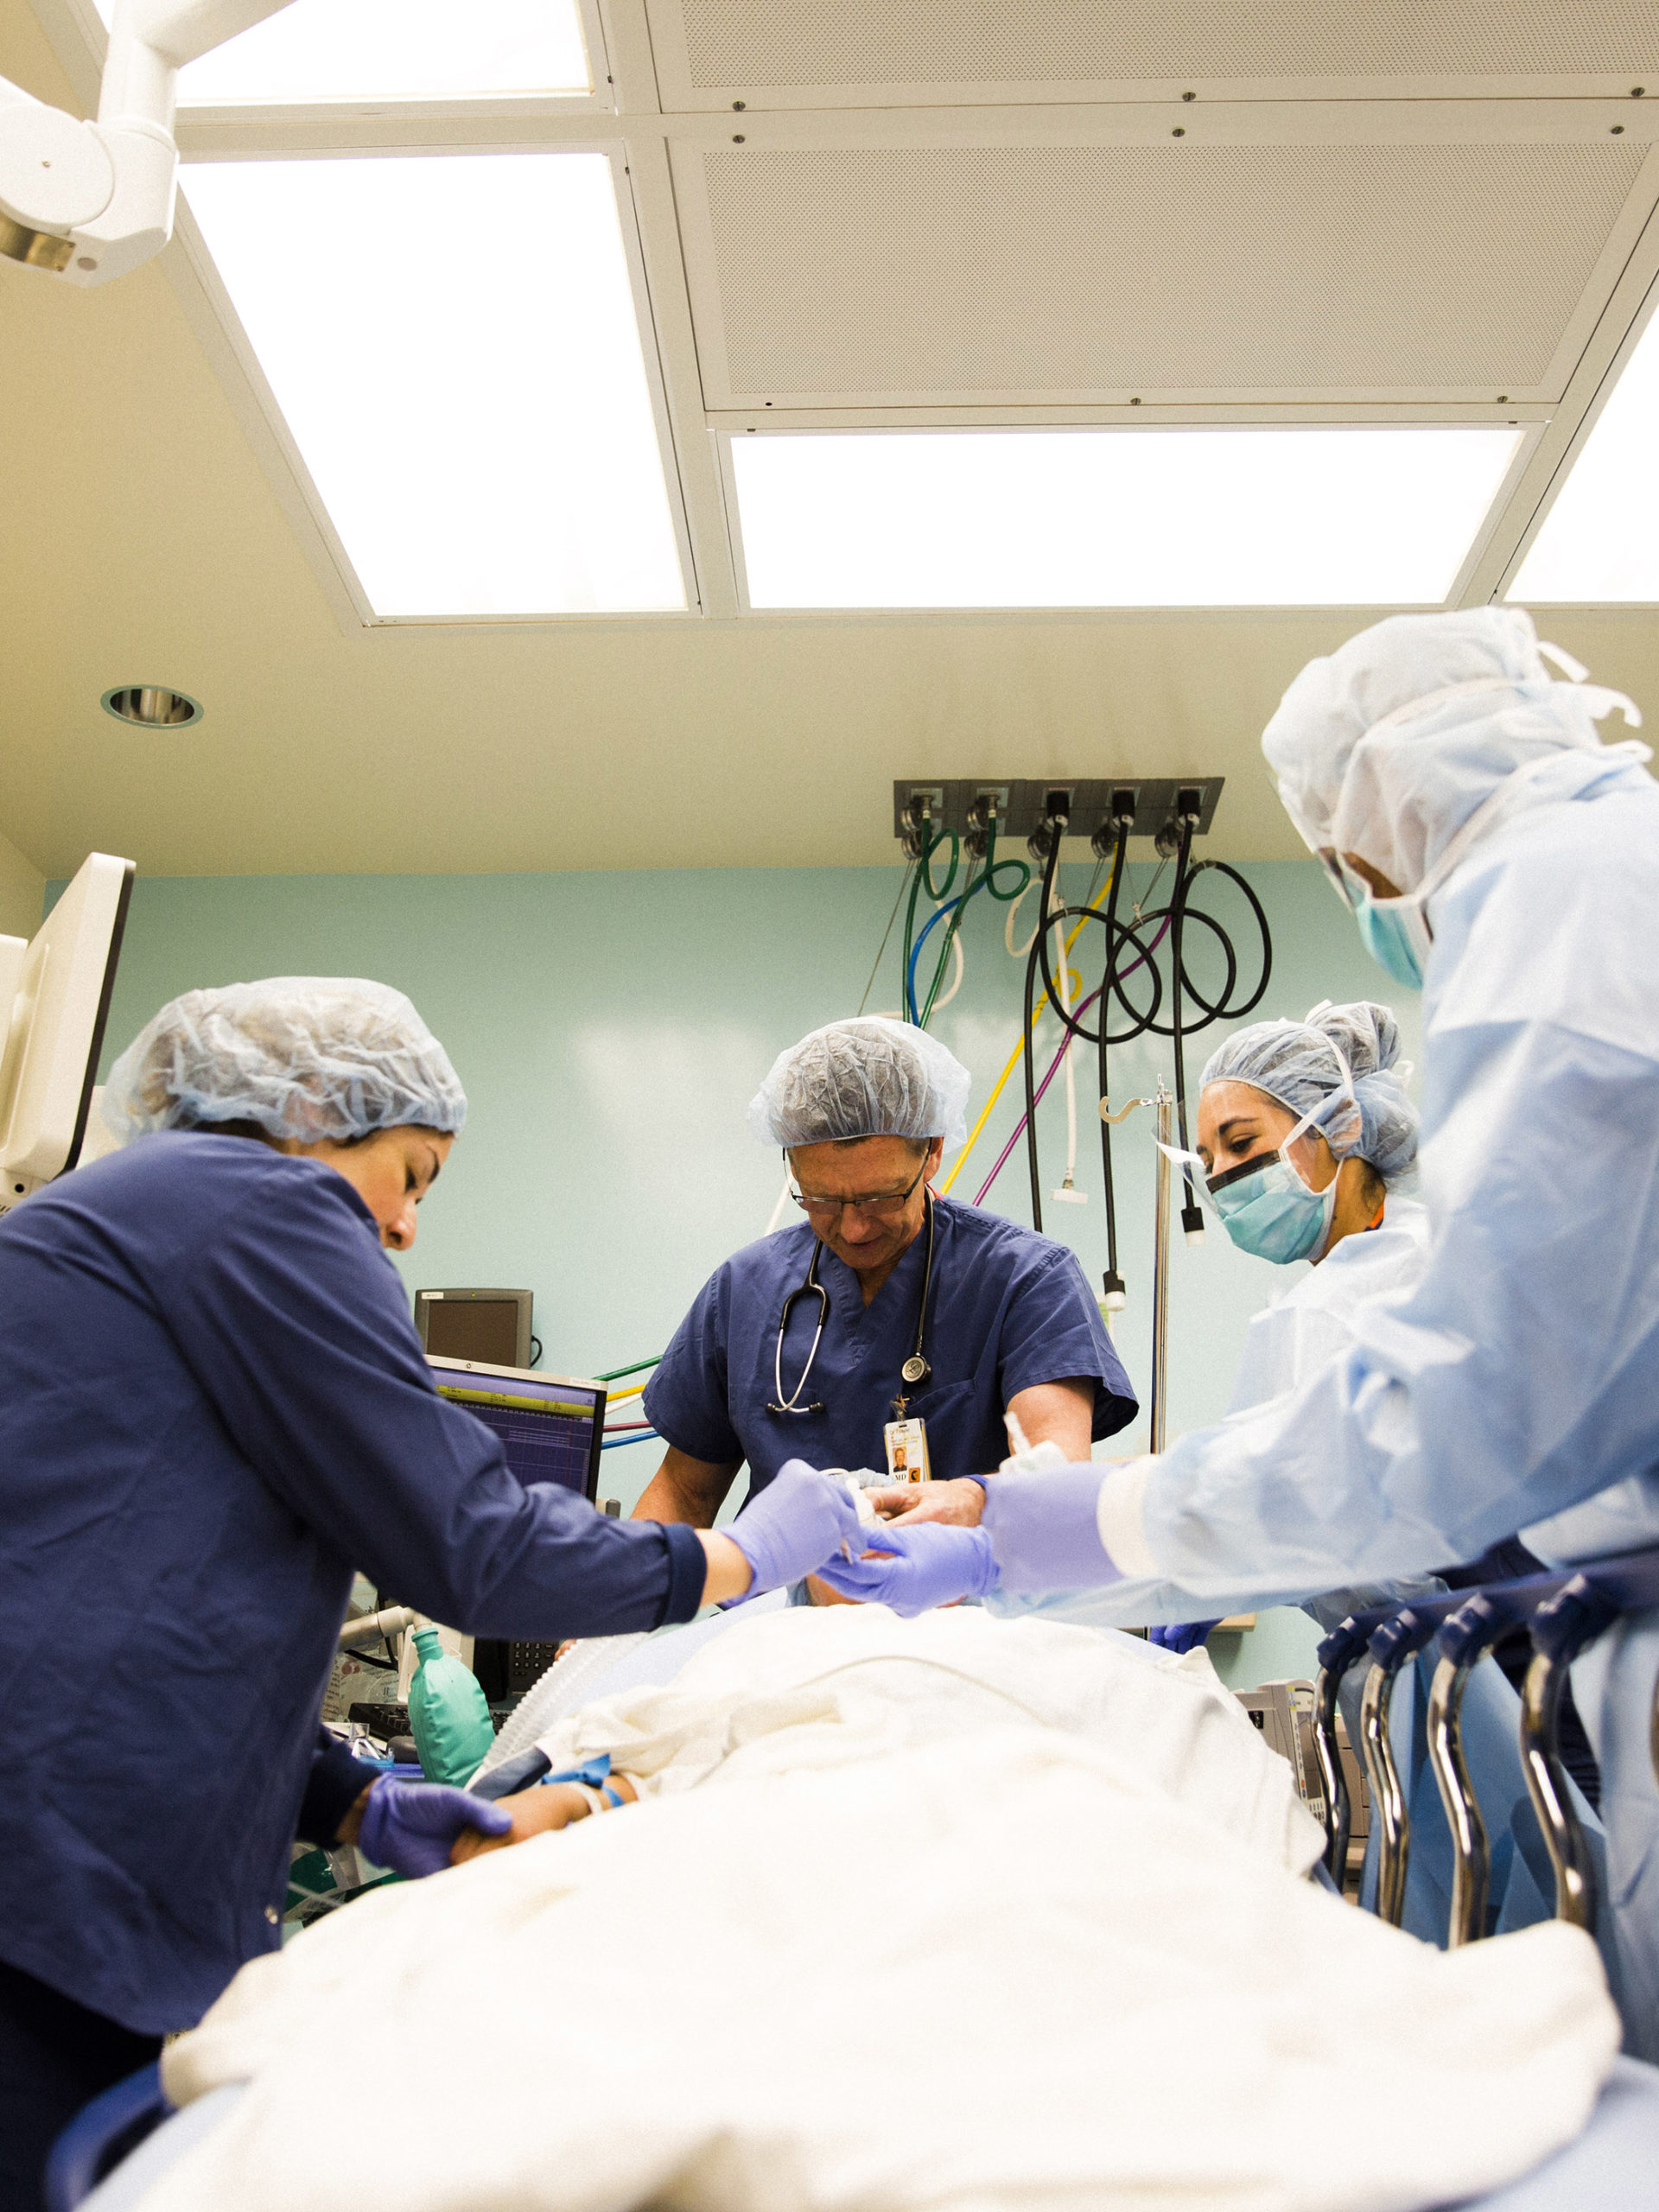 CHOC doctors putting child under anesthesia preparing to start surgery